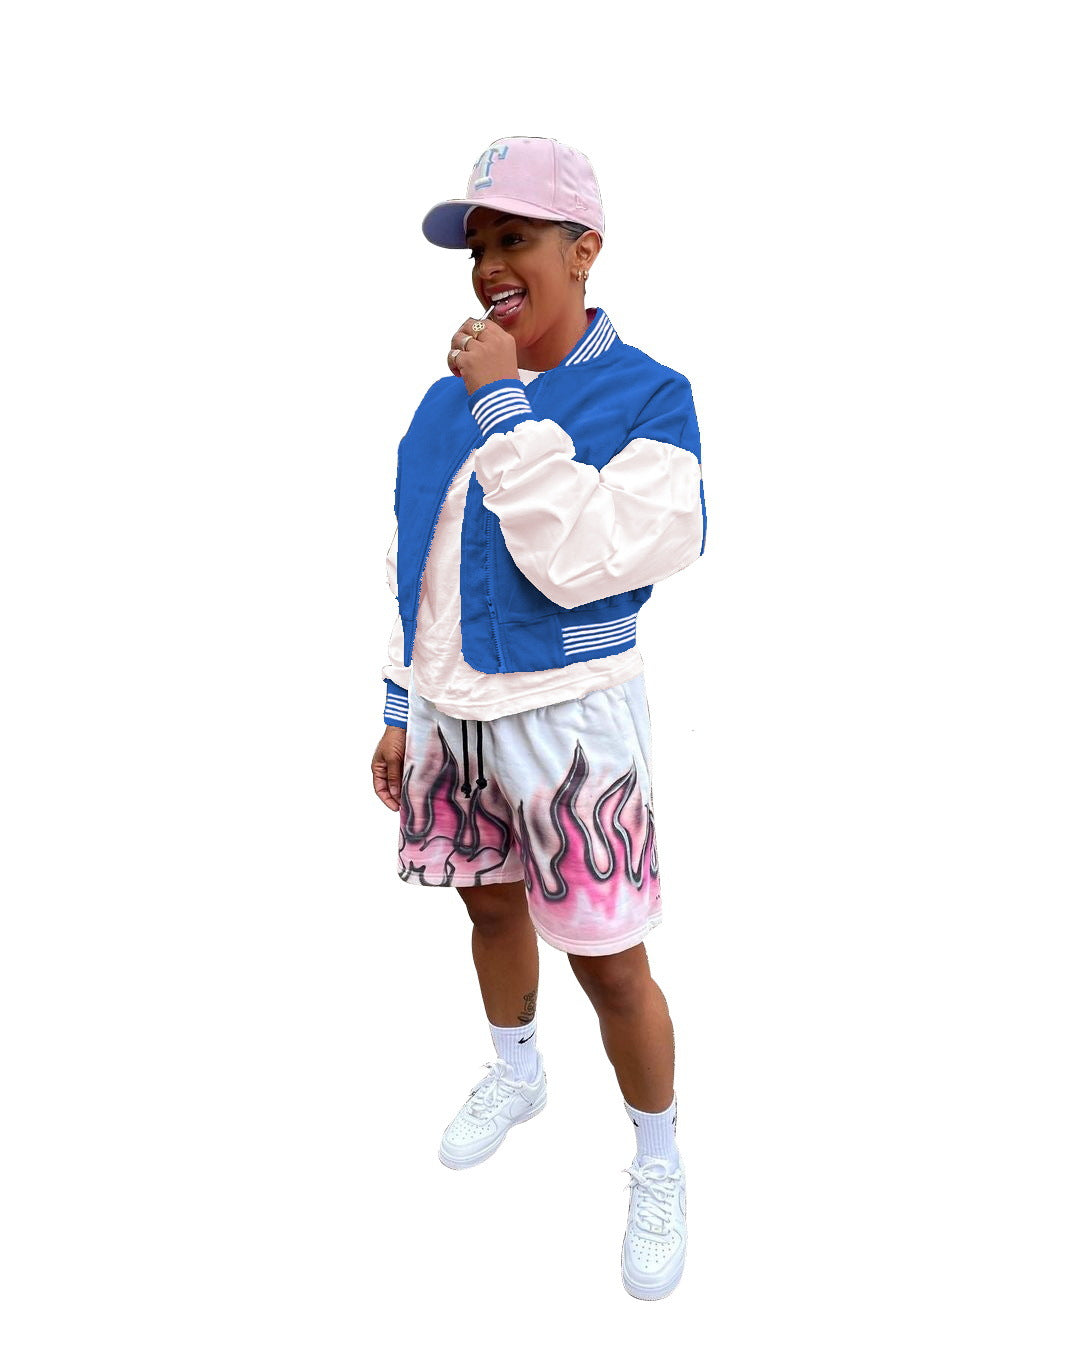 HHDMV 2021 Spring New Women Fashion Street Hip Hop Style Baseball Jacket Long Sleeve Zipper Striped Baseball Jacket